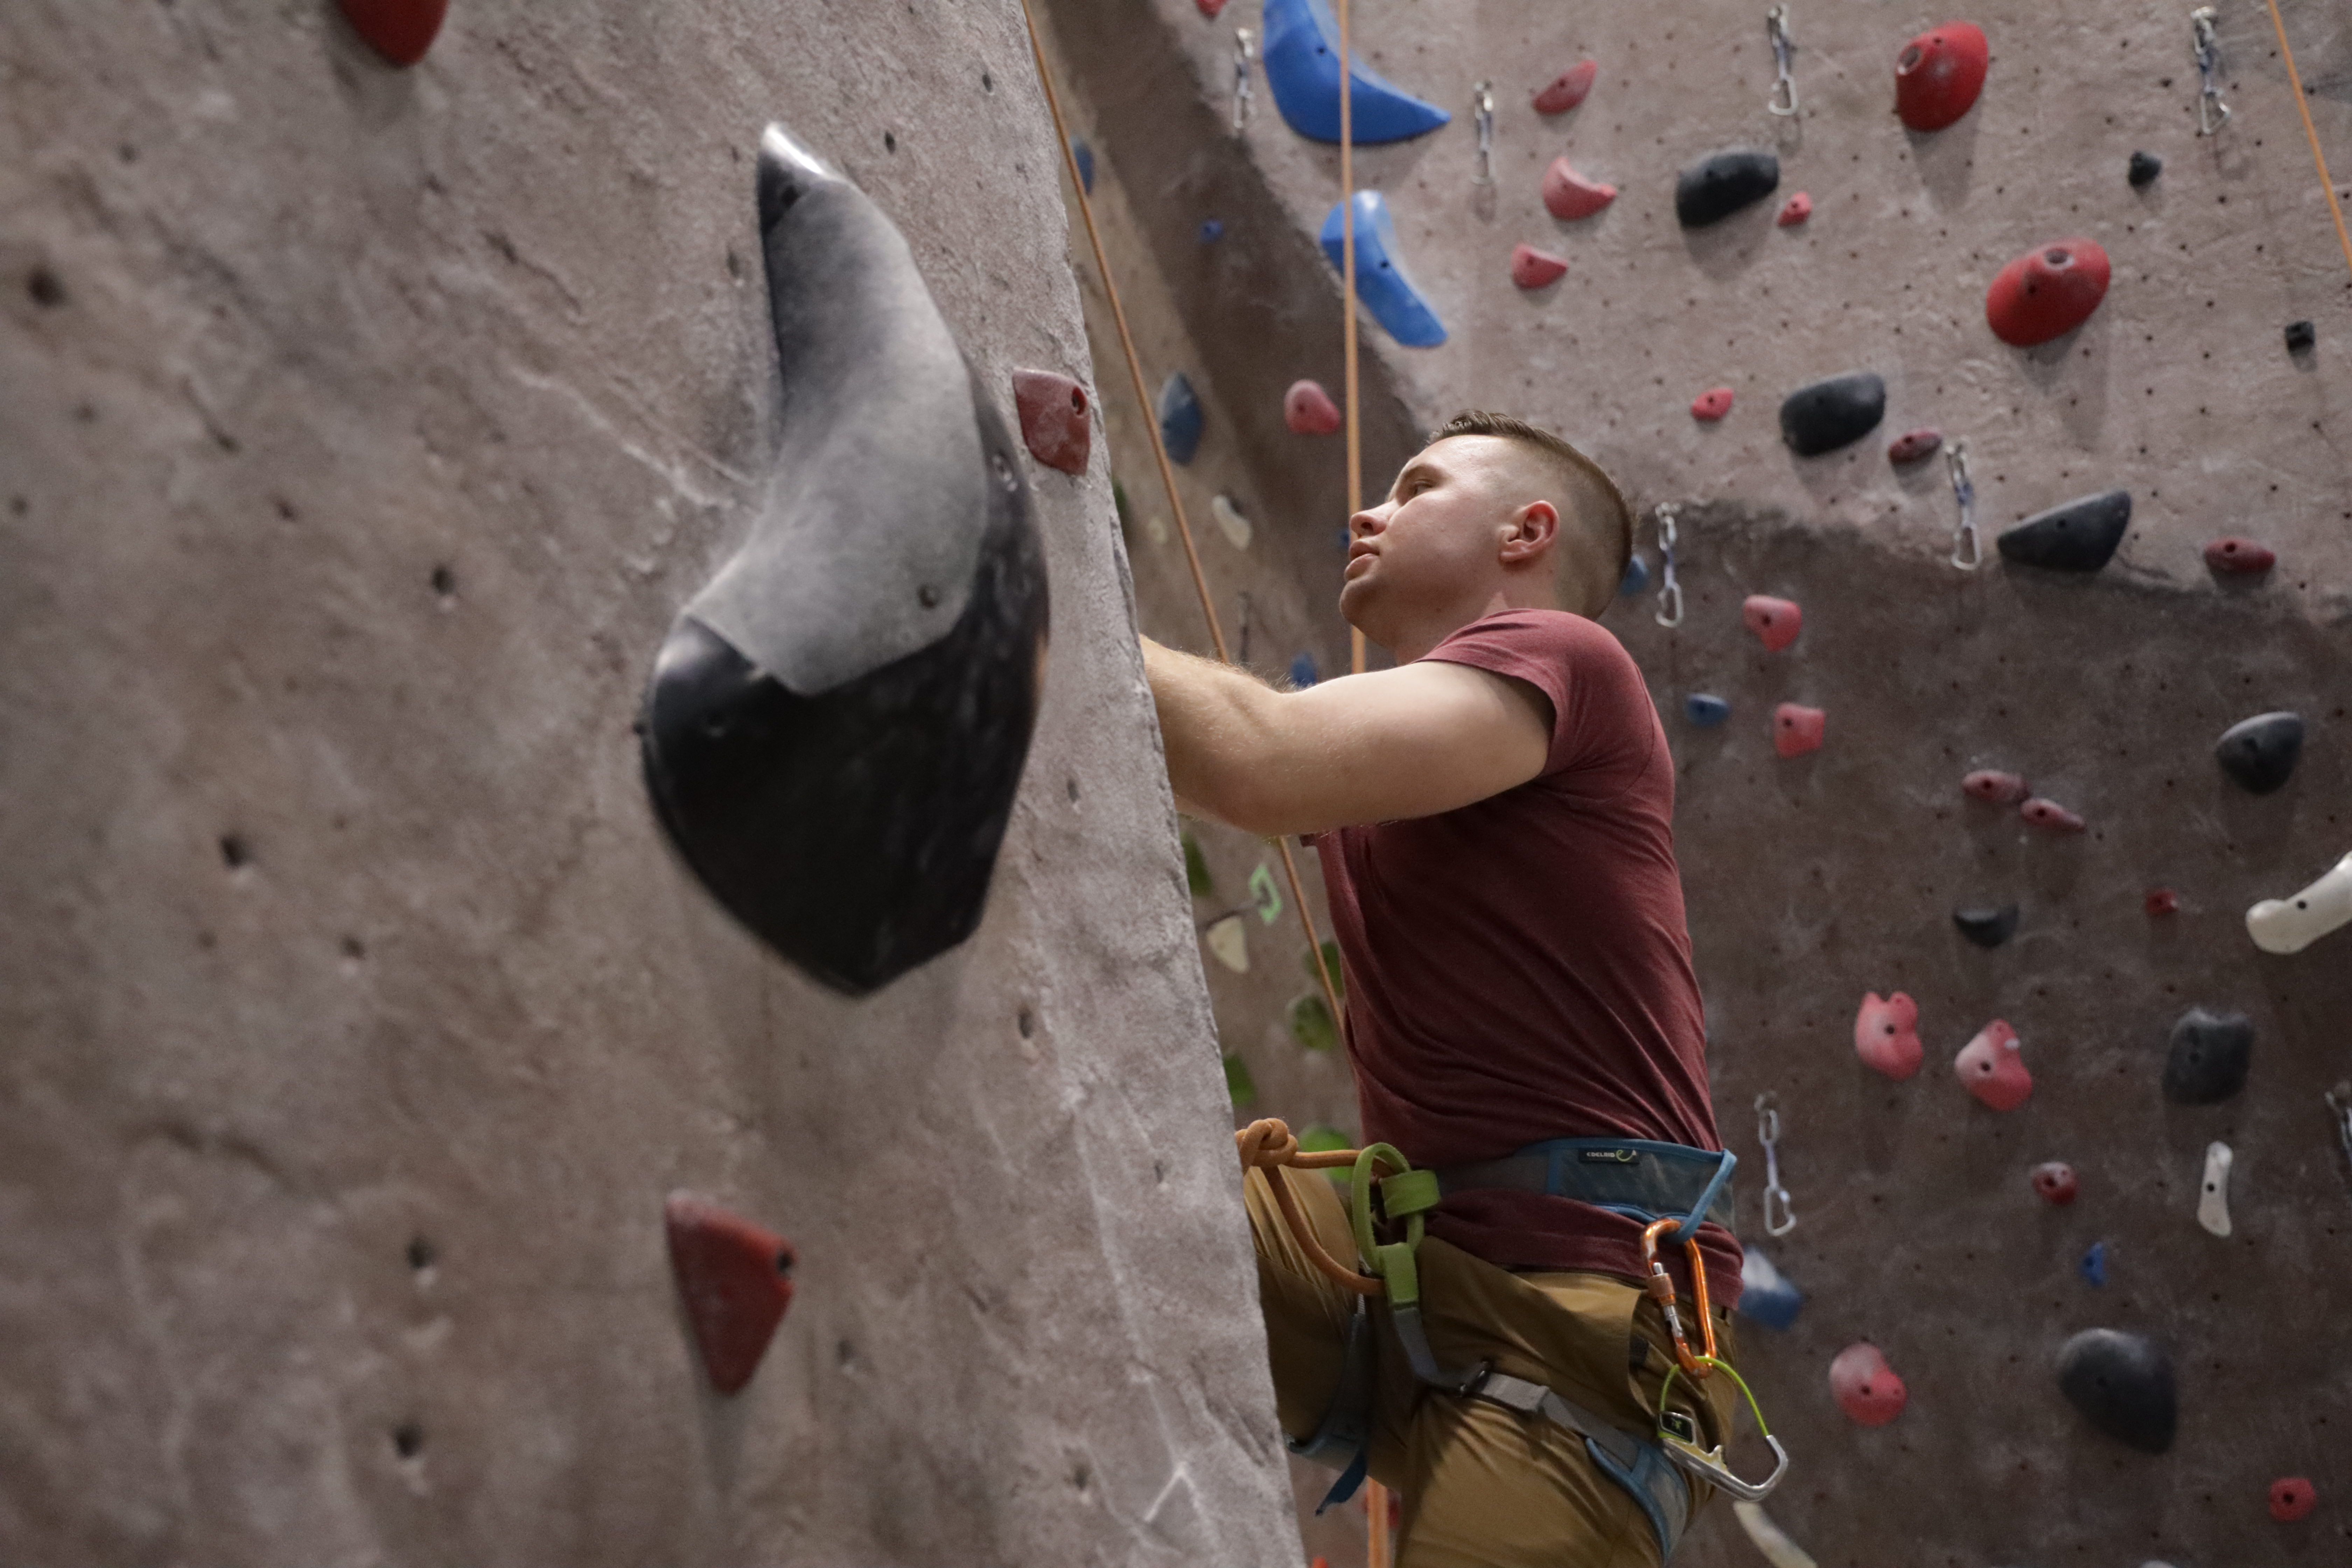 Indoor Rock Climbing at Wild Walls - February